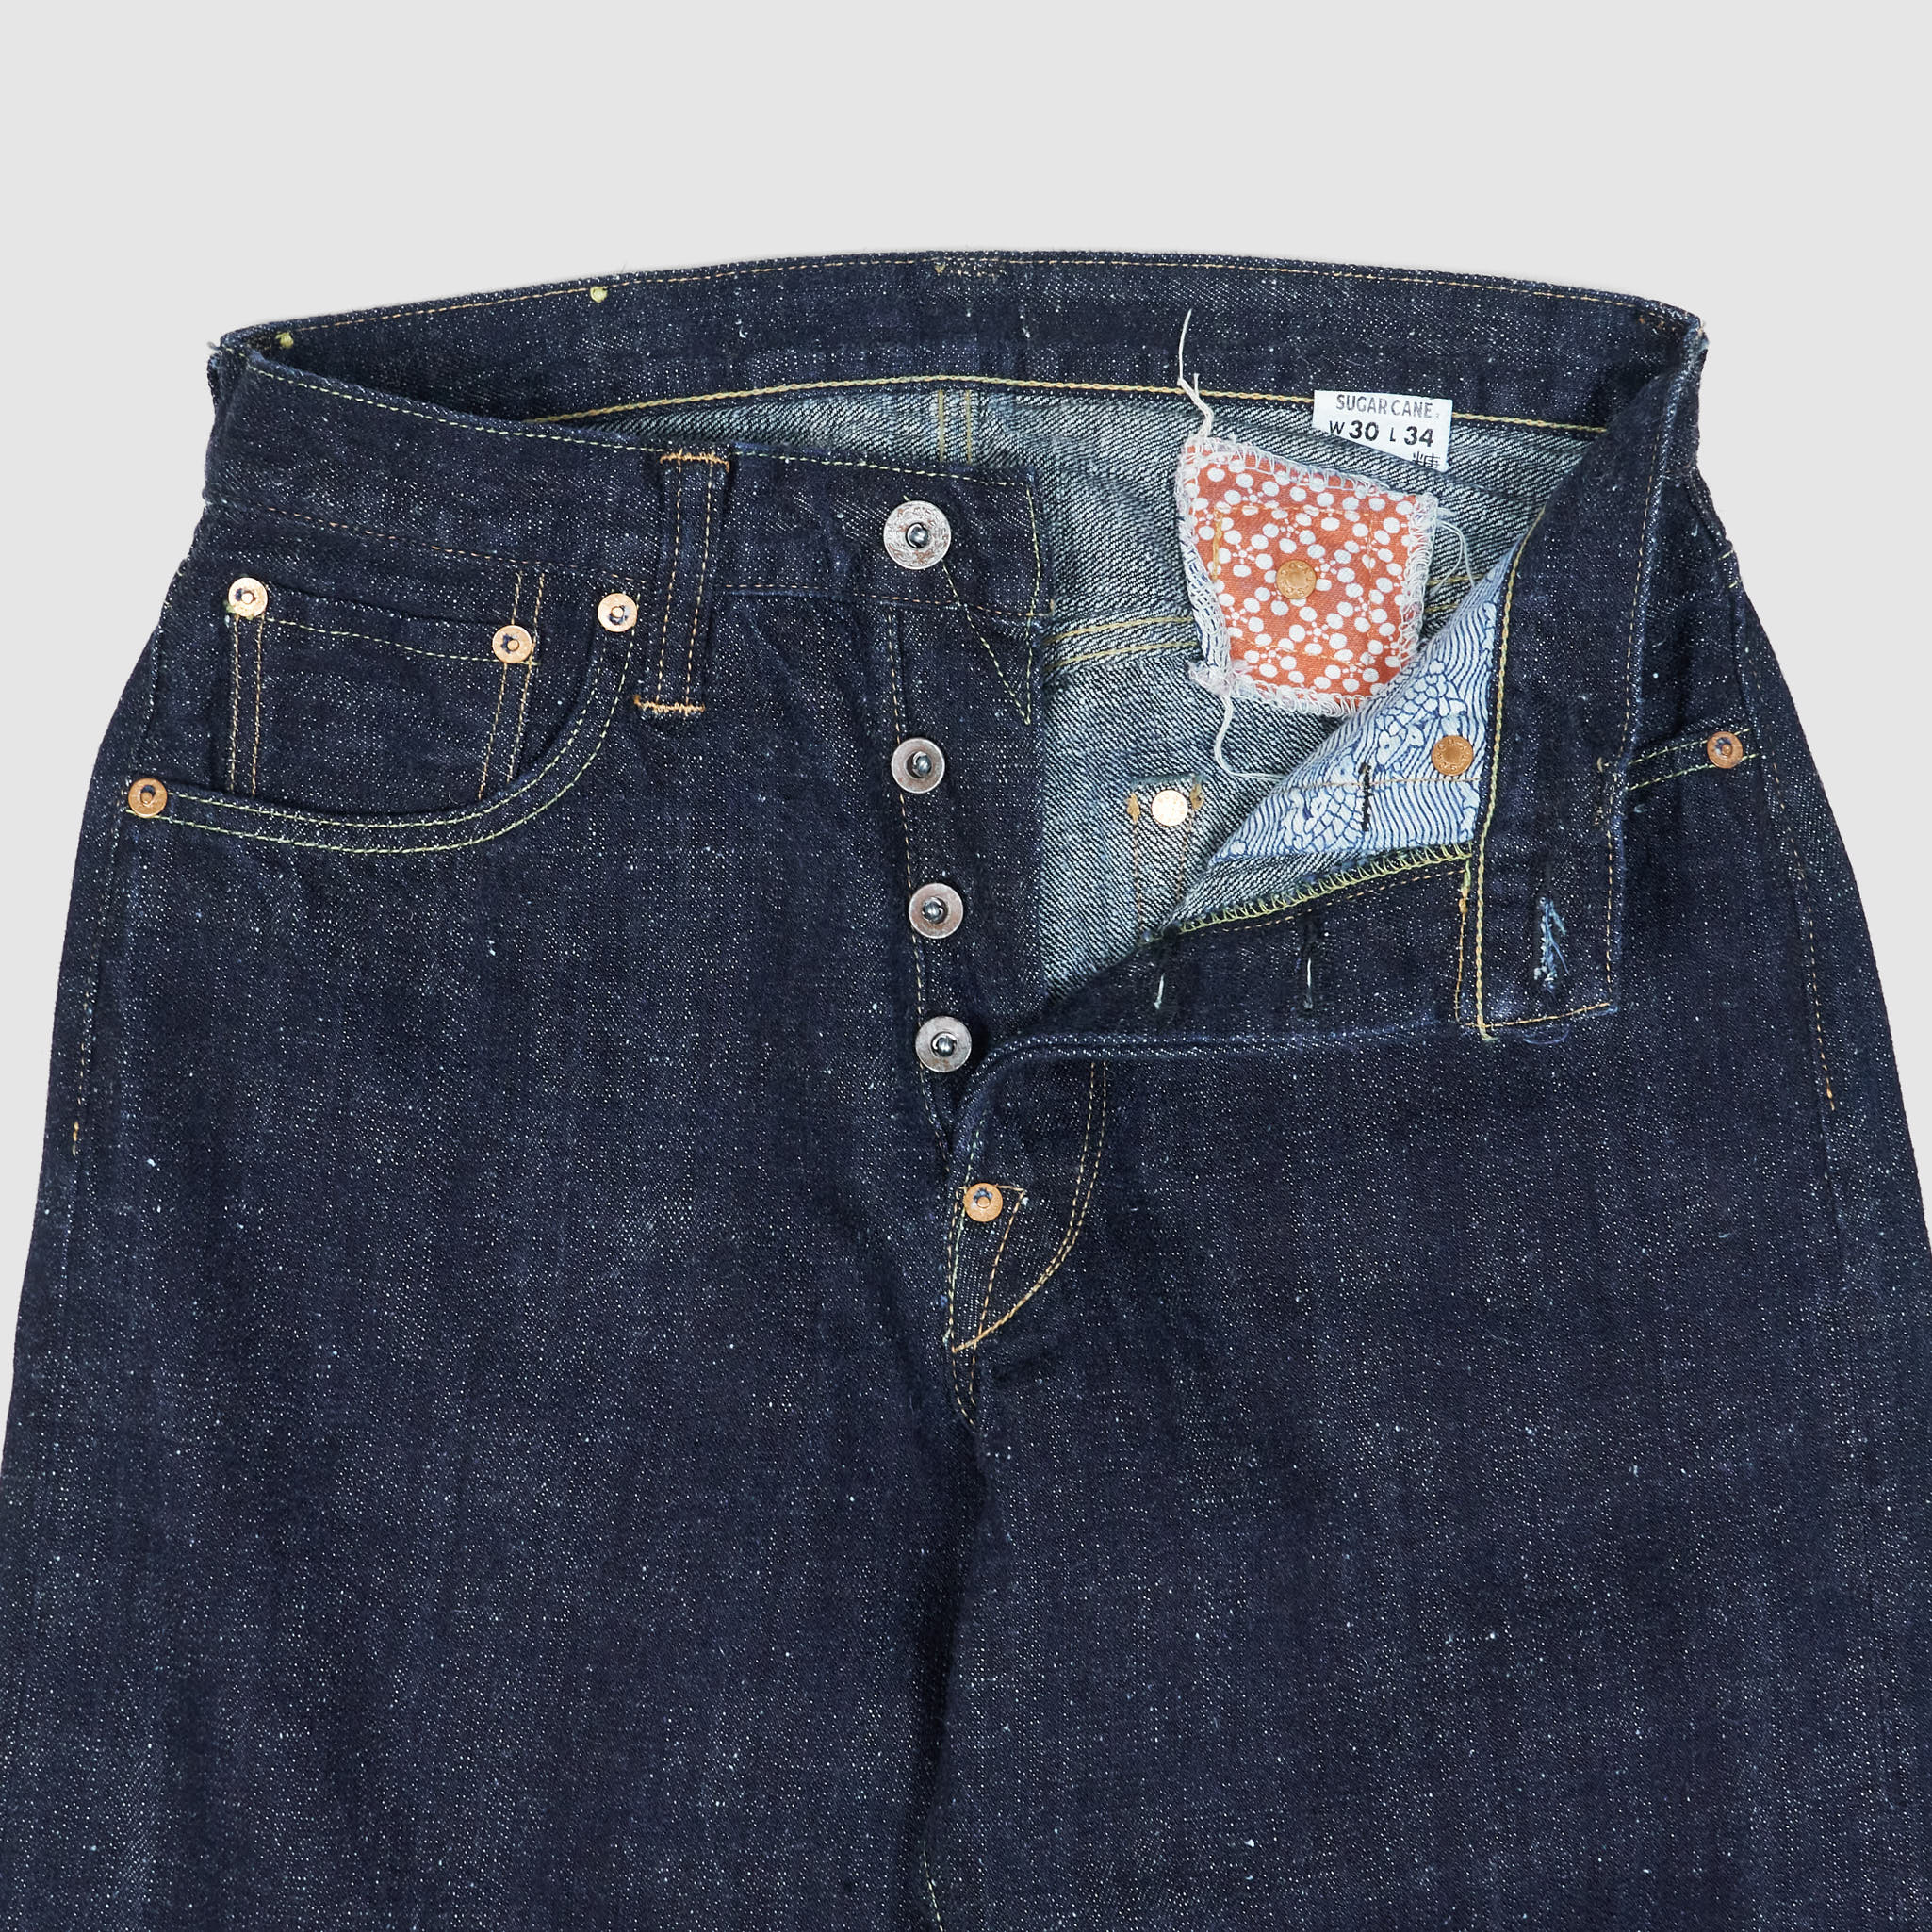 Sugar Cane Okinawa Jeans - DeeCee style